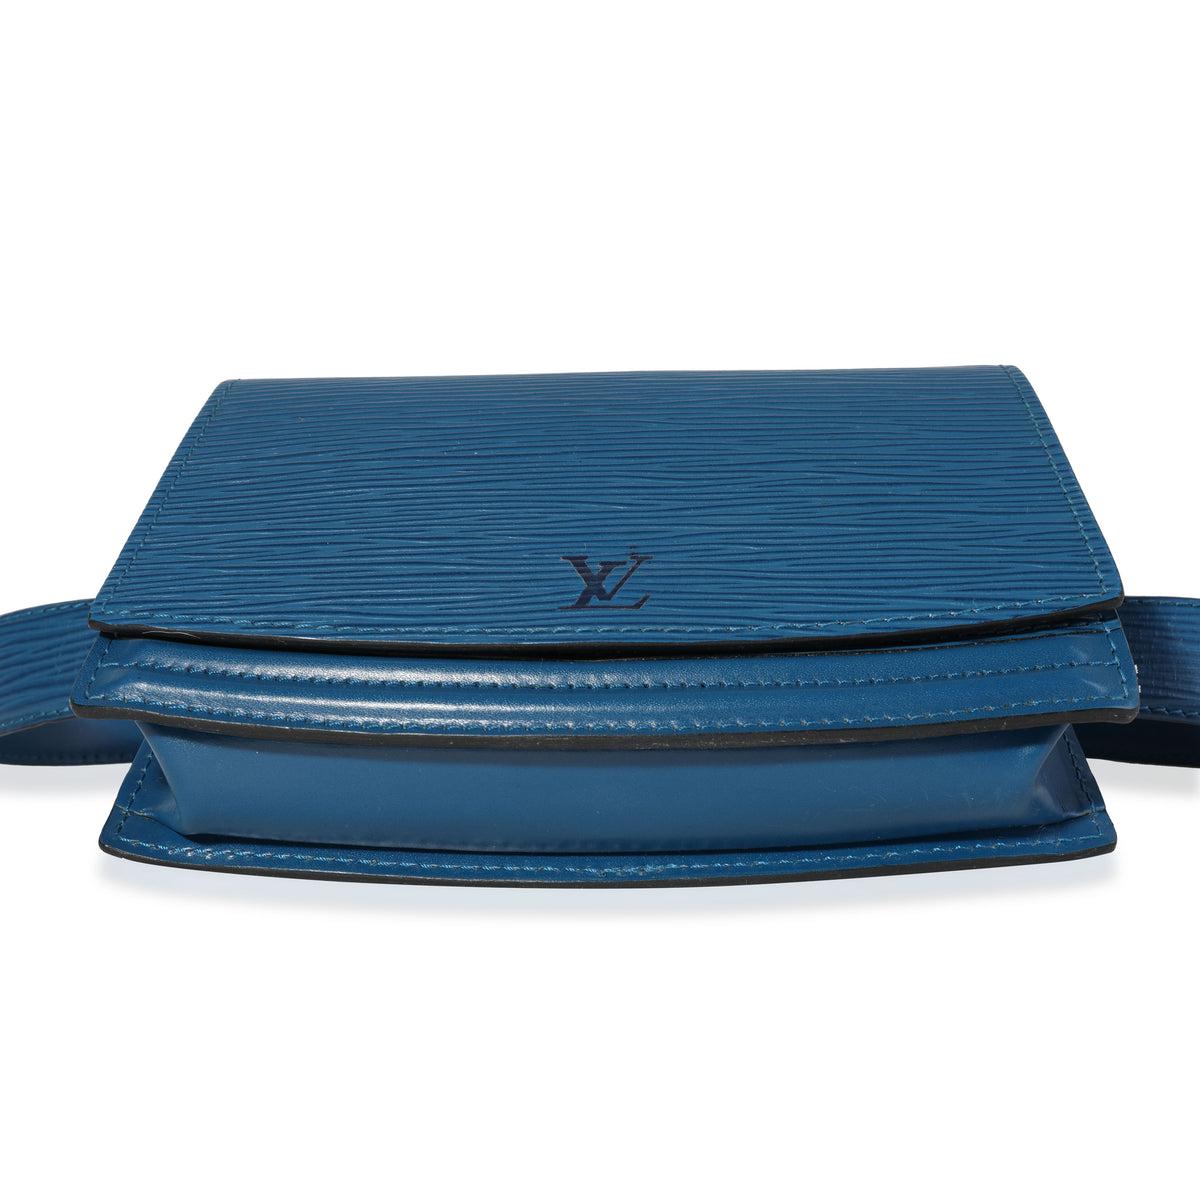 Louis Vuitton Blue Epi Leather Tilsit Belt Bag. Features gold hardware, a blue epi leather strap, blue leather interior and a flap closure.

77313MSC